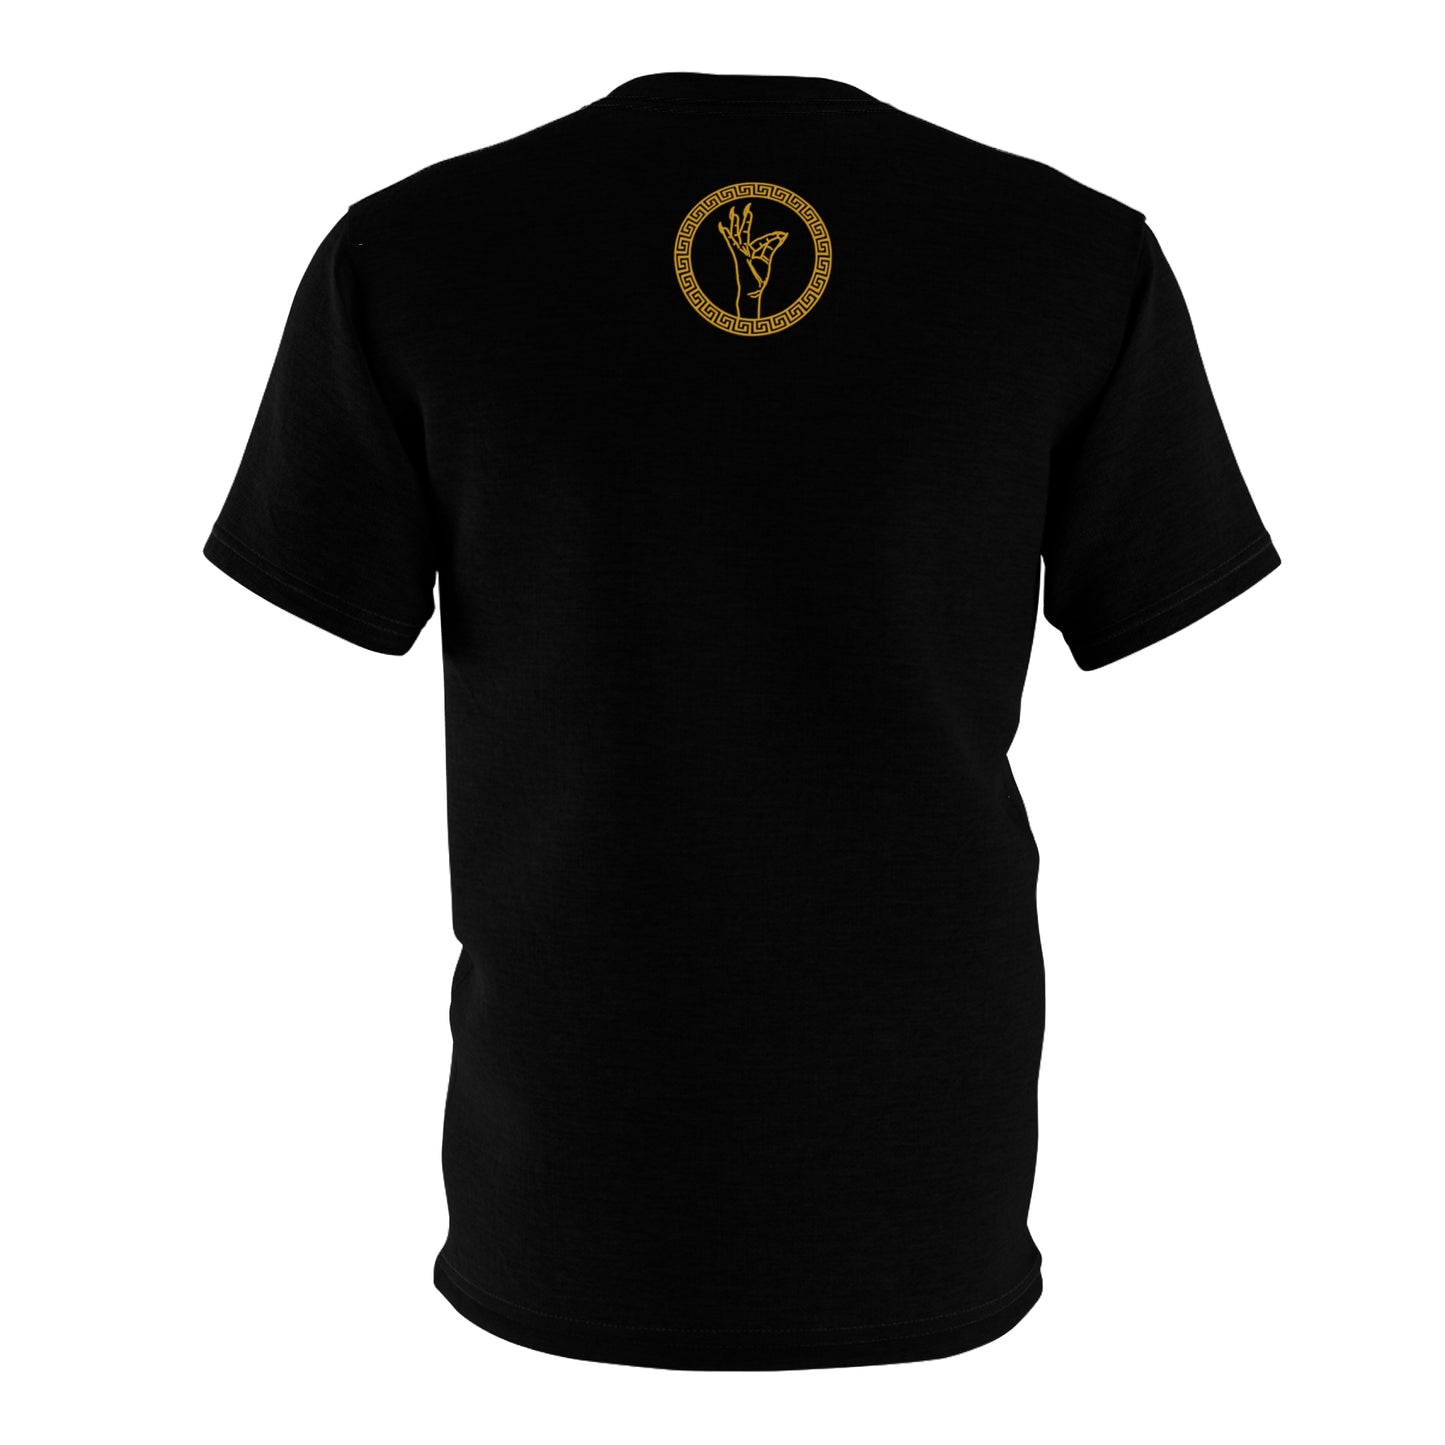 “Daily Basis” Golden Glamour Unisex Shirt